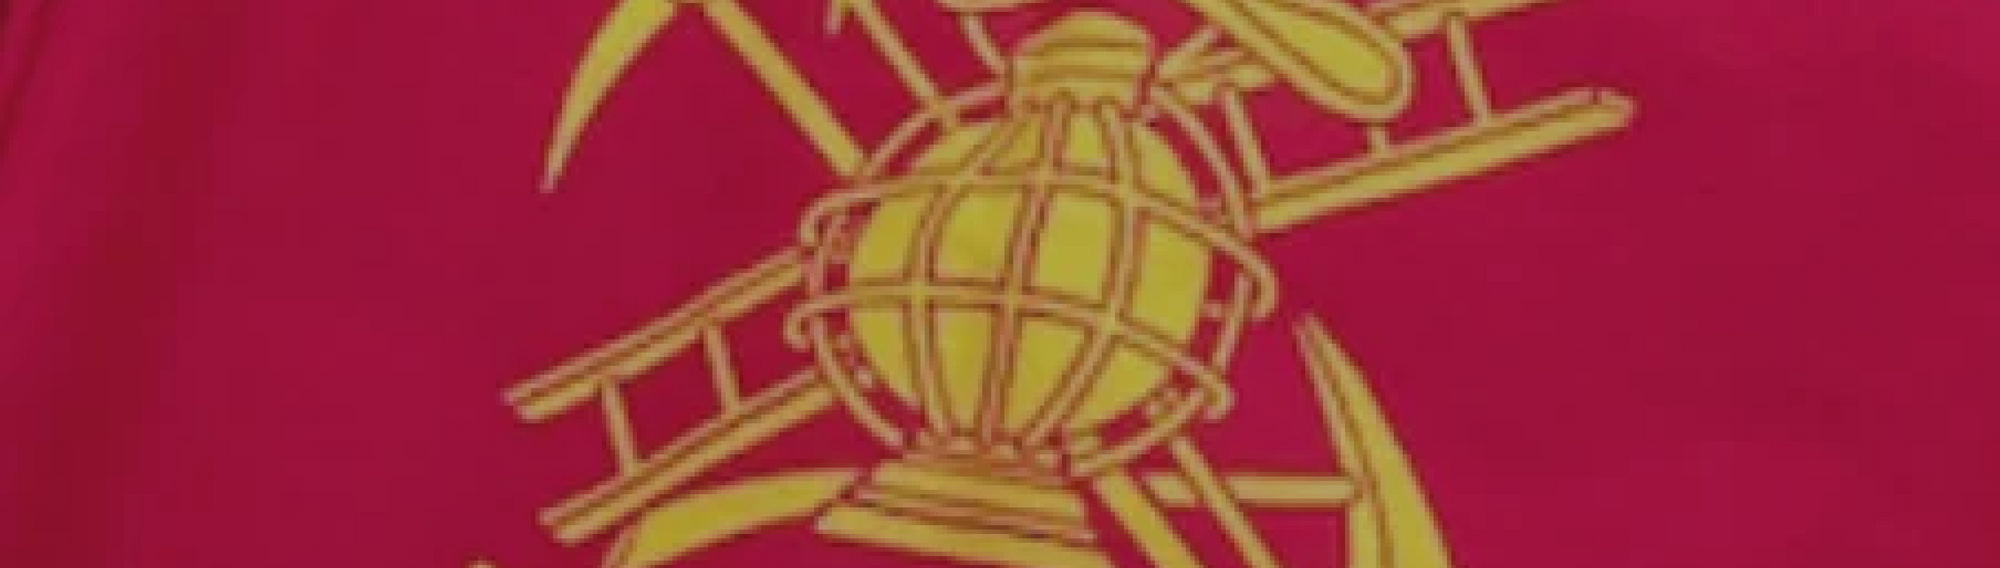 Civilian Service - Firefighter Flags